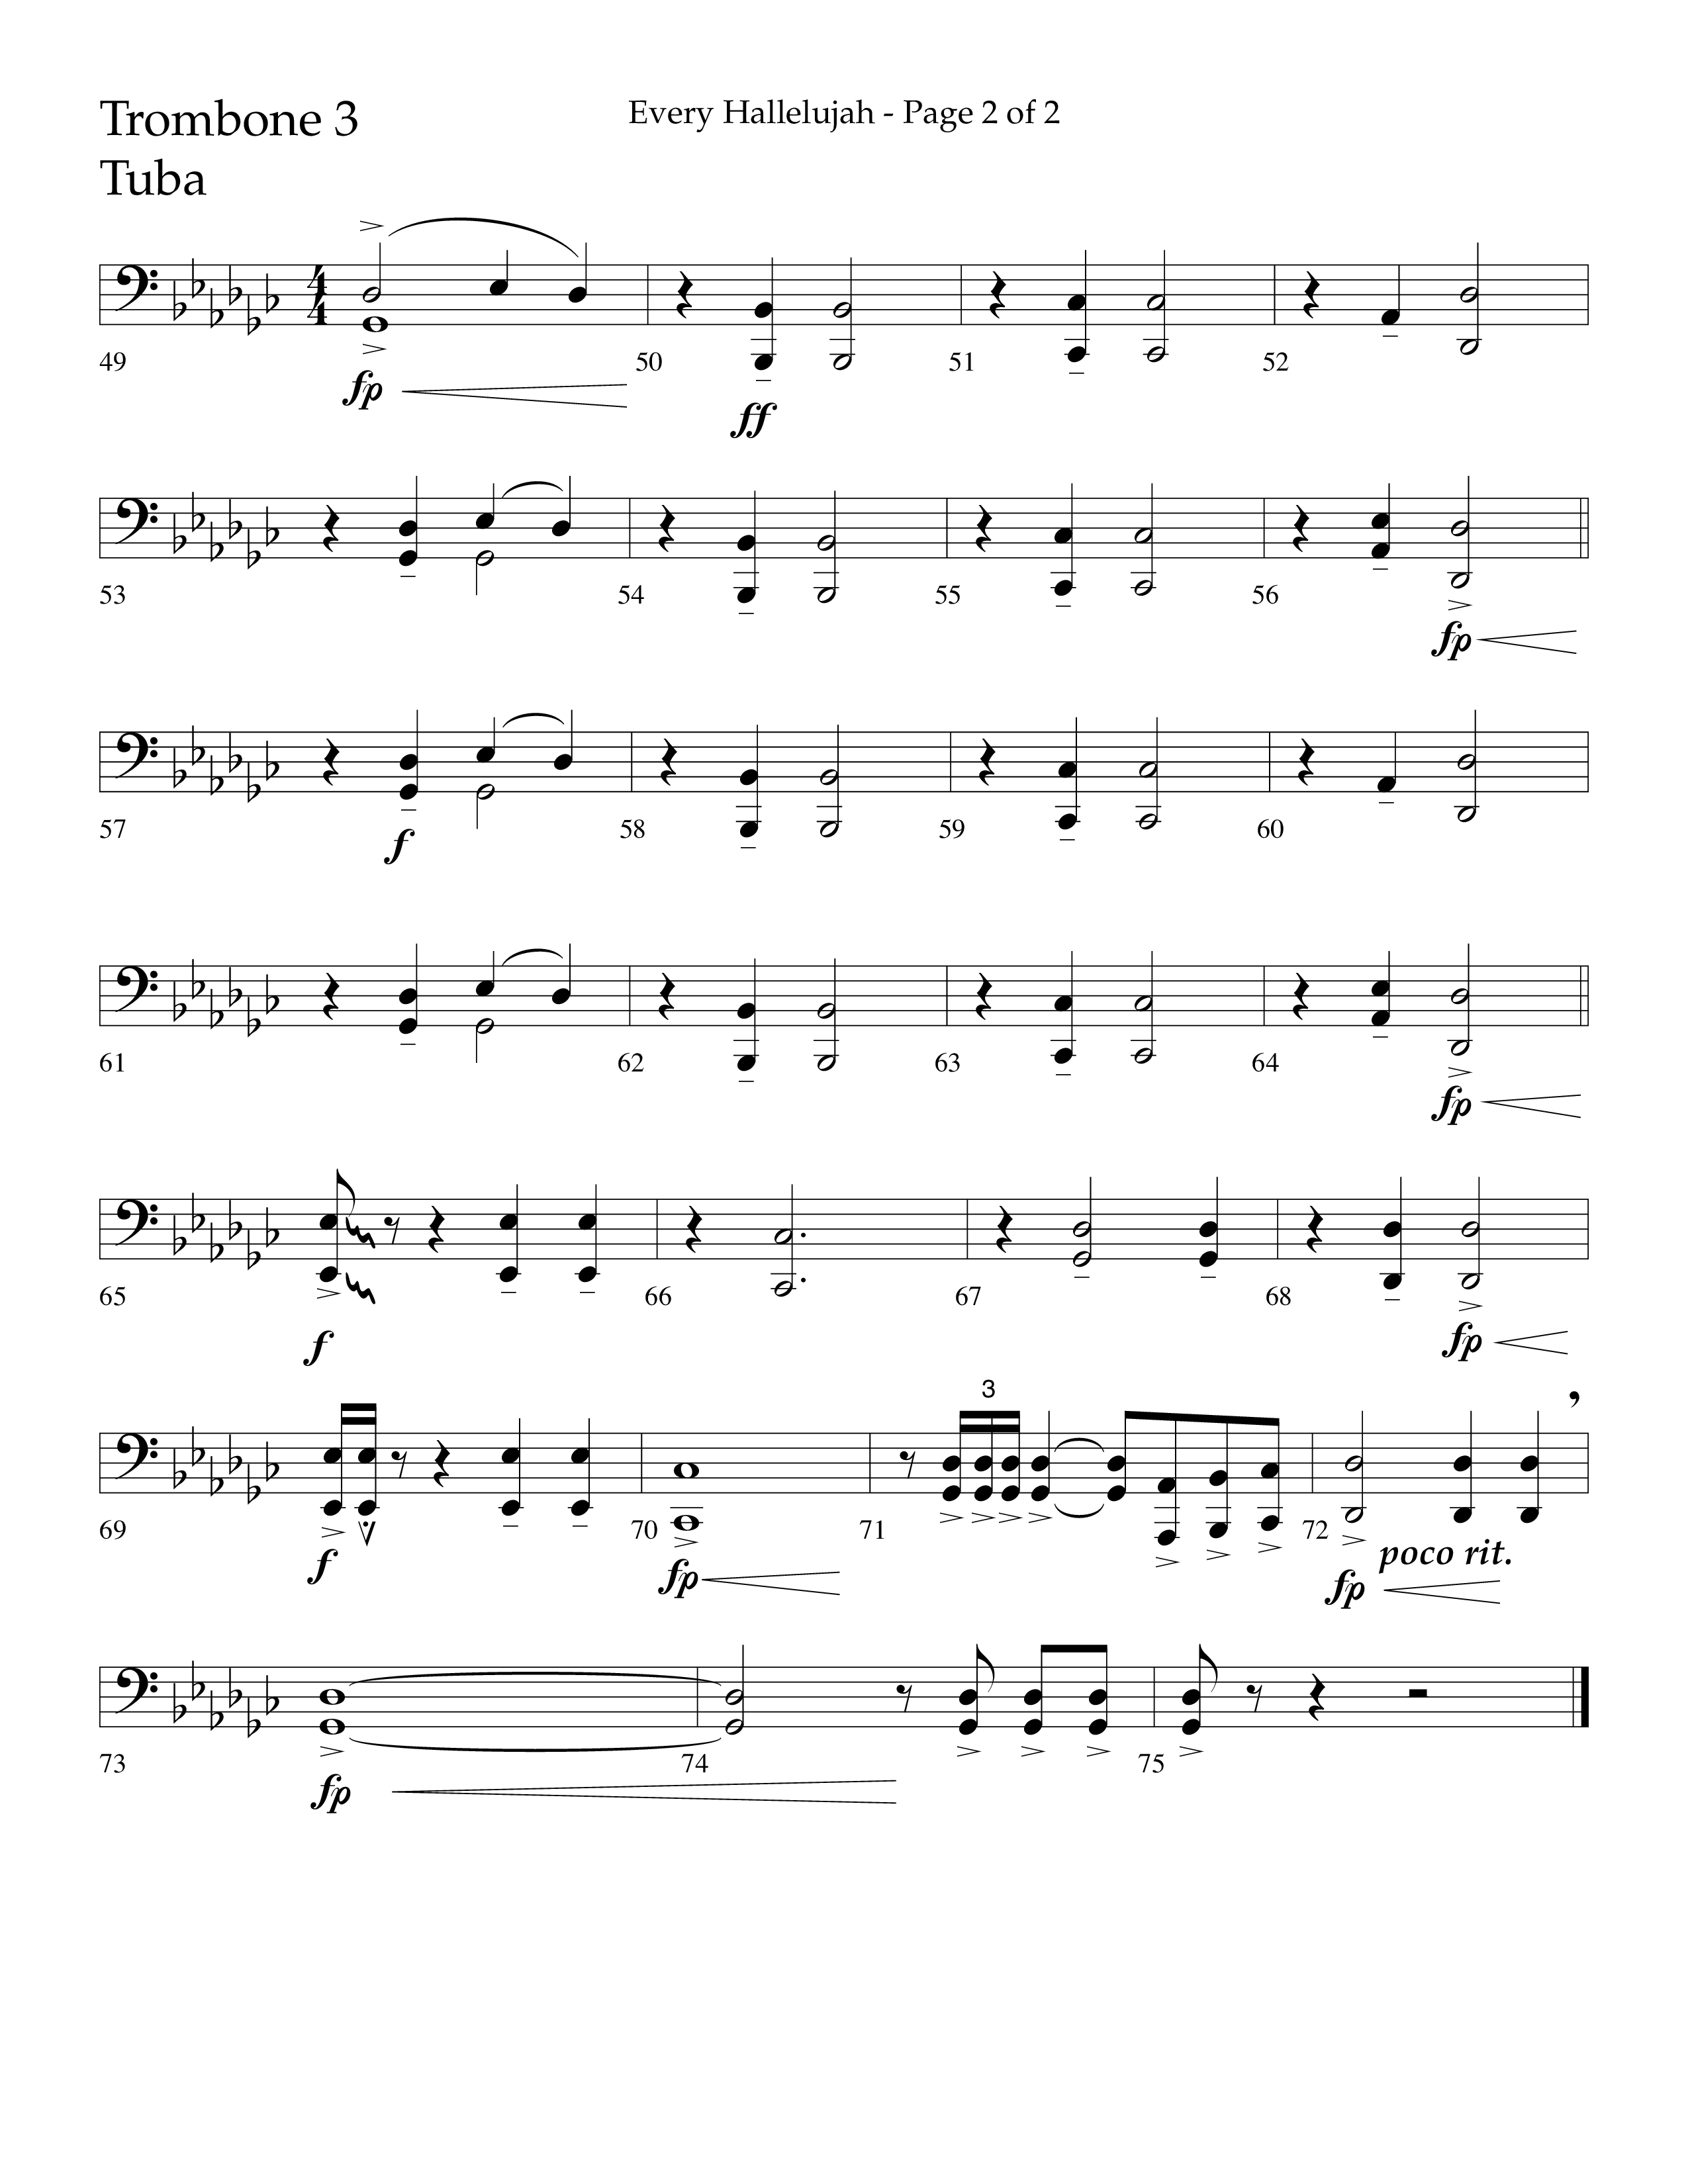 Every Hallelujah (Choral Anthem SATB) Trombone 3/Tuba (Lifeway Choral / Arr. Marty Hamby)